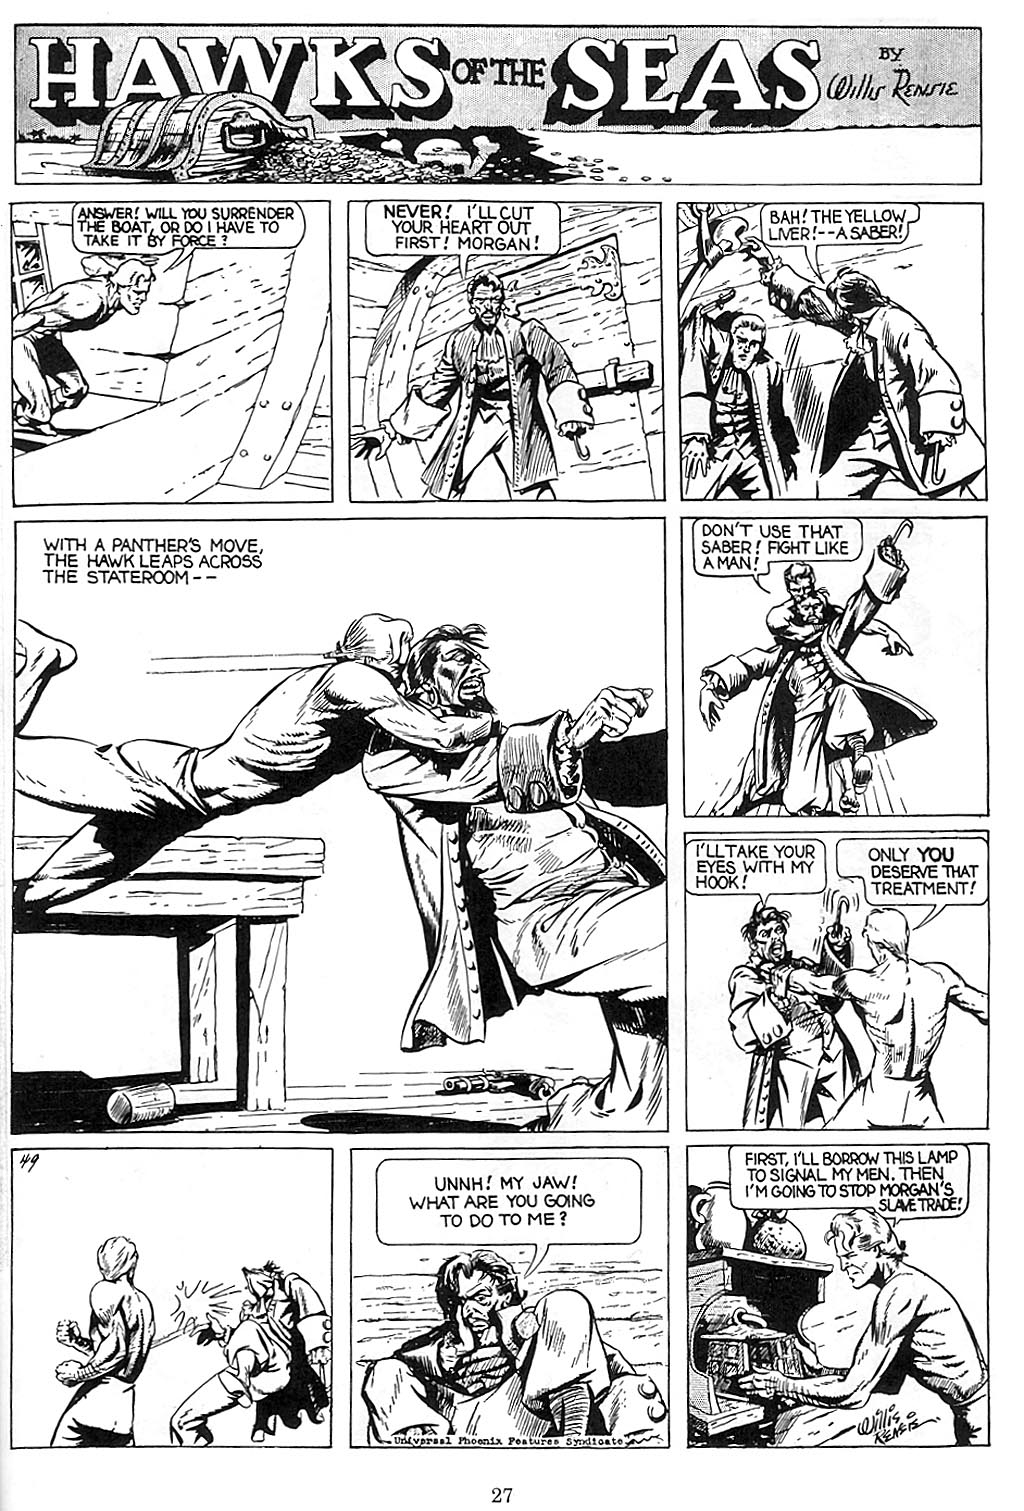 Read online Will Eisner's Hawks of the Seas comic -  Issue # TPB - 28